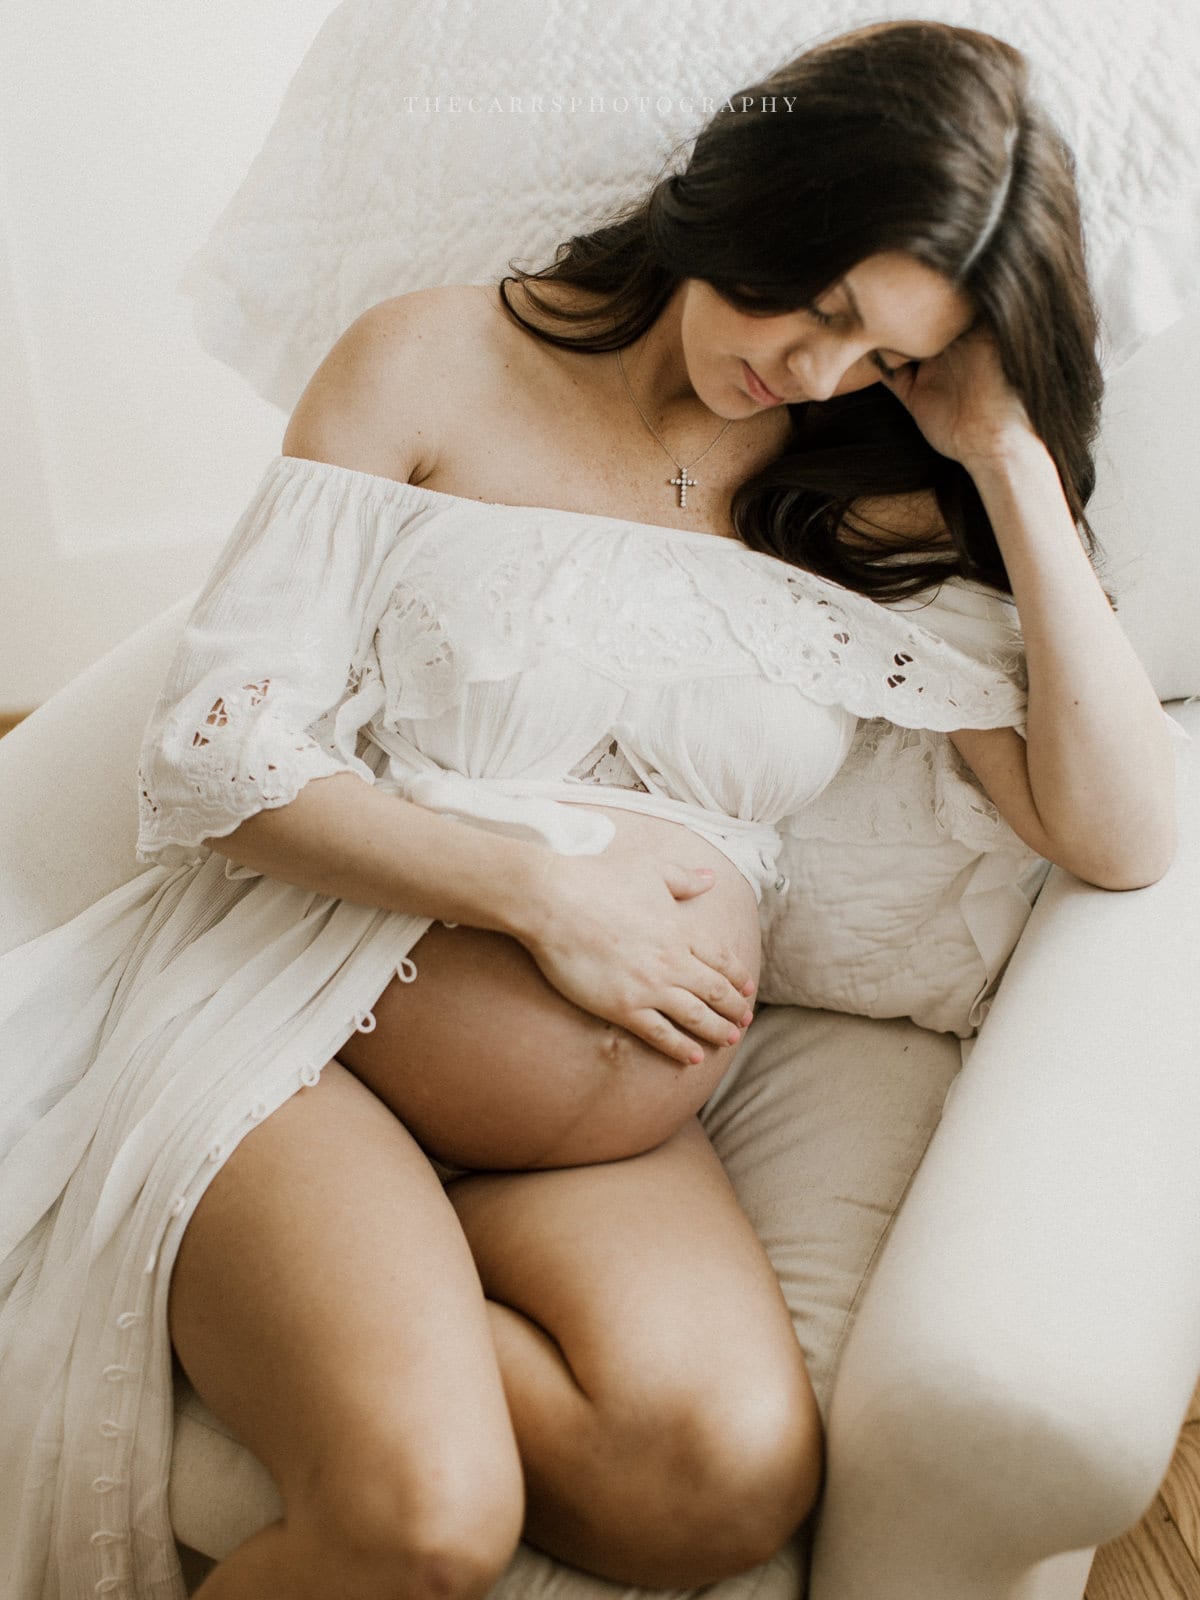 woman sits in nursery - dayton ohio maternity photographer